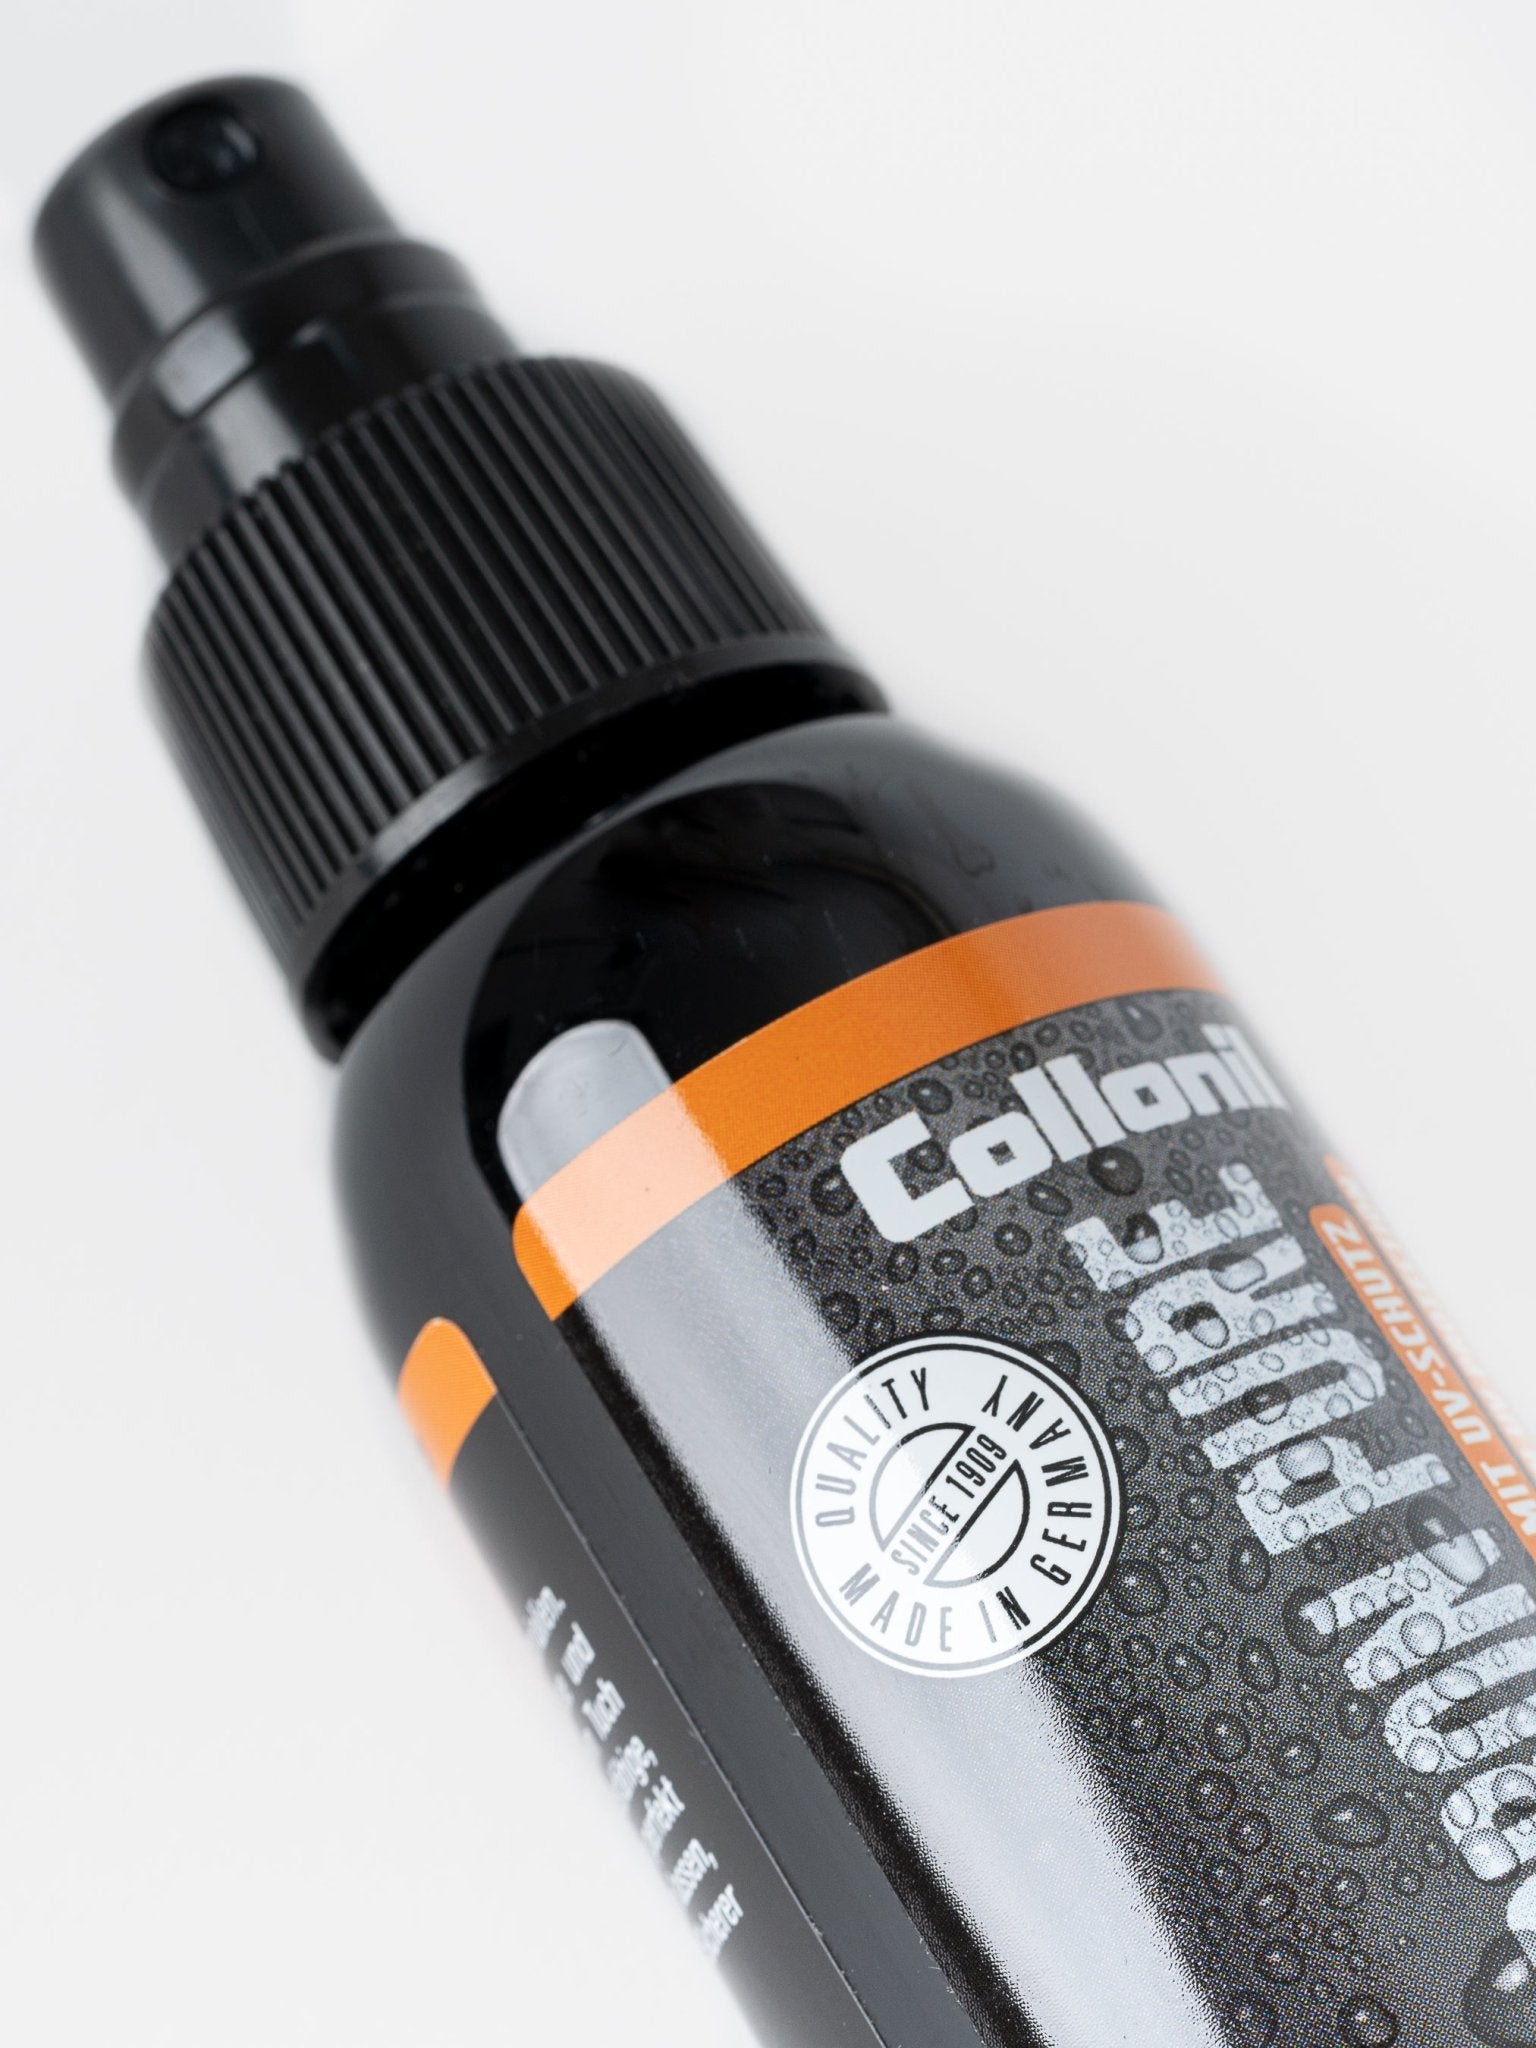 The Collonil Carbon Pure Spray - 100ml